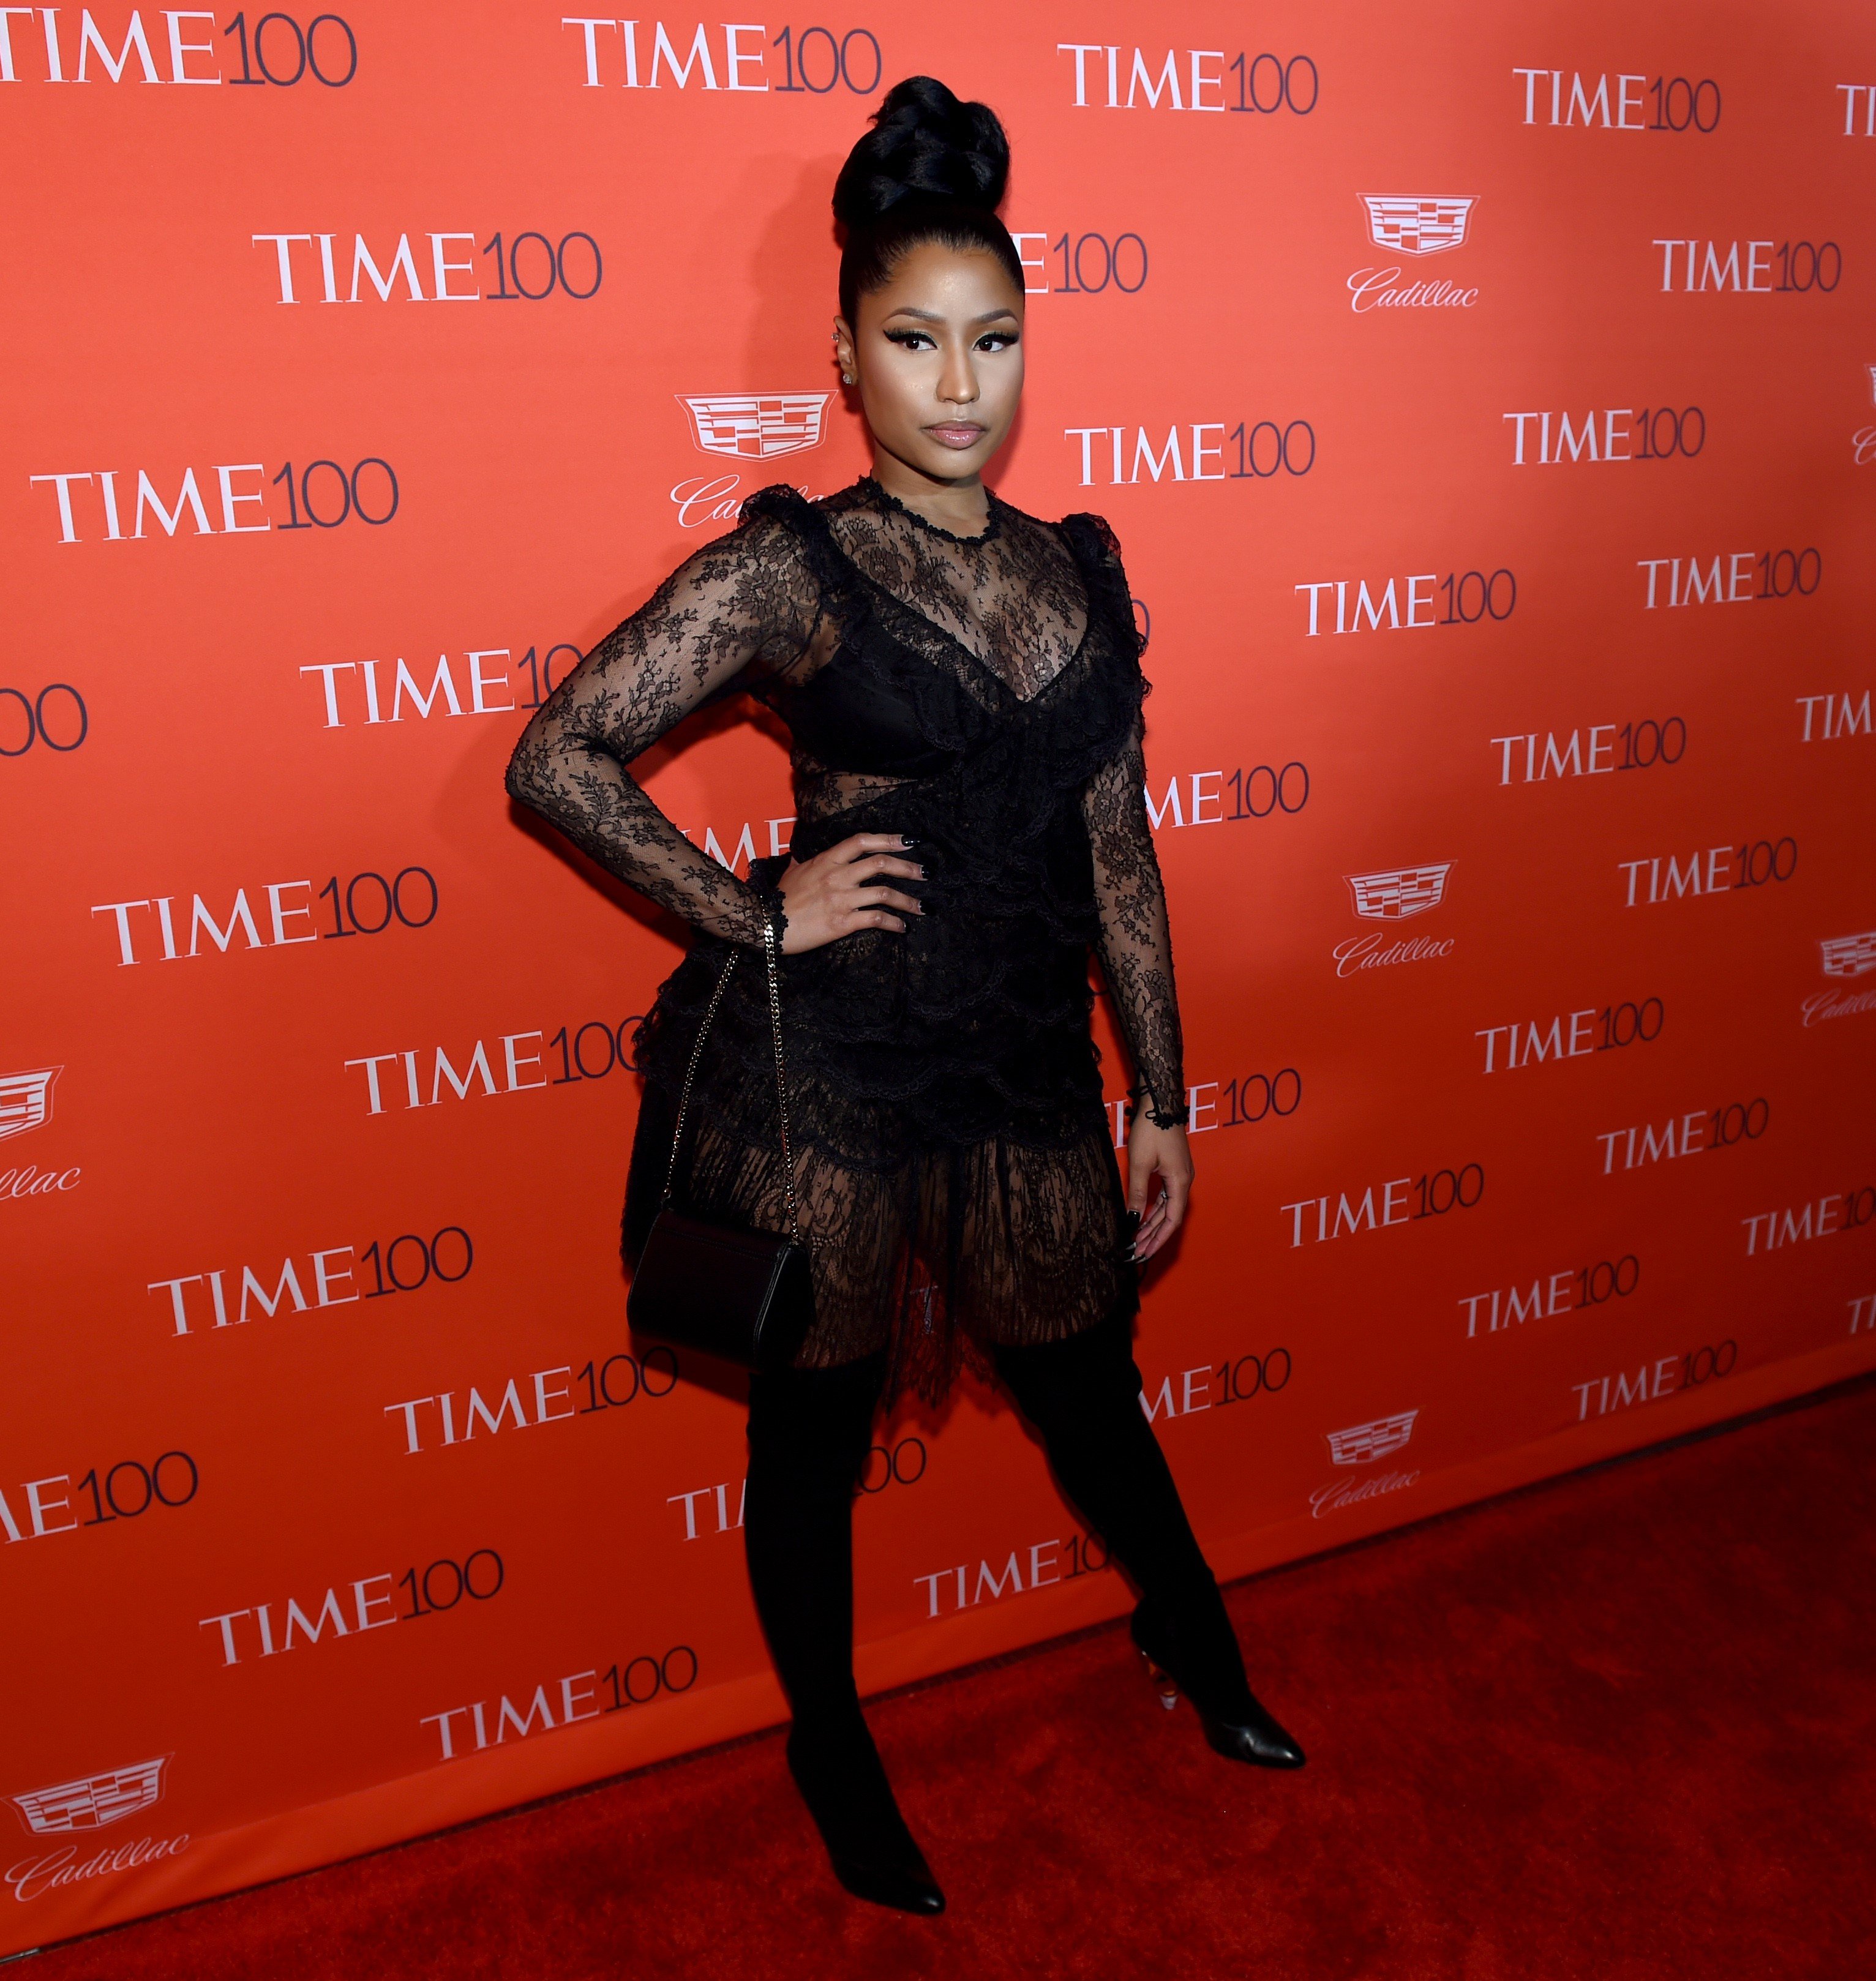 Nicki Minaj at the TIME 100 gala in New York on April 26, 2016.